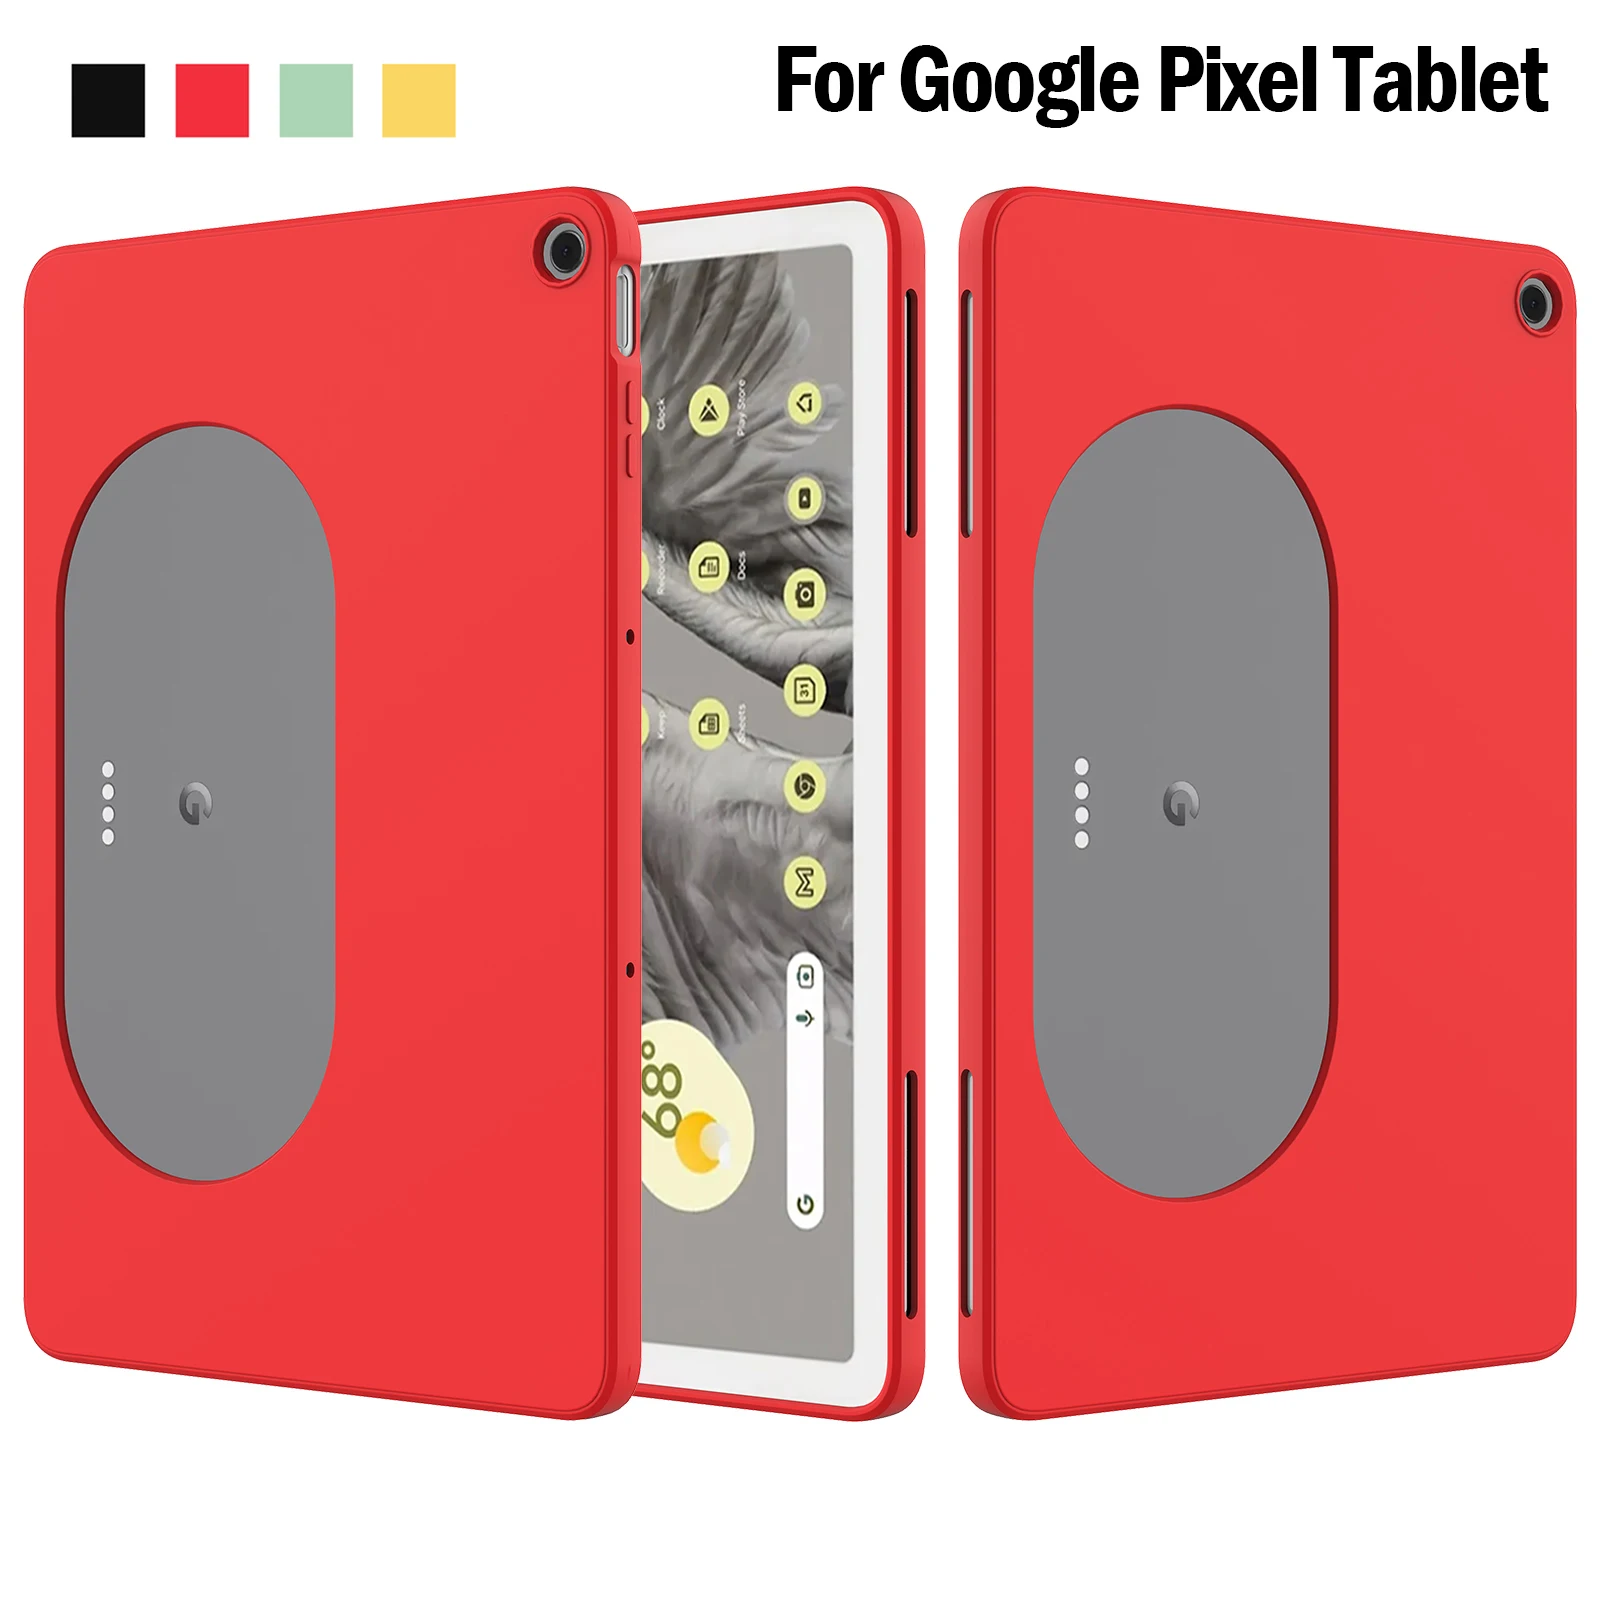 Pixel Tablet Case